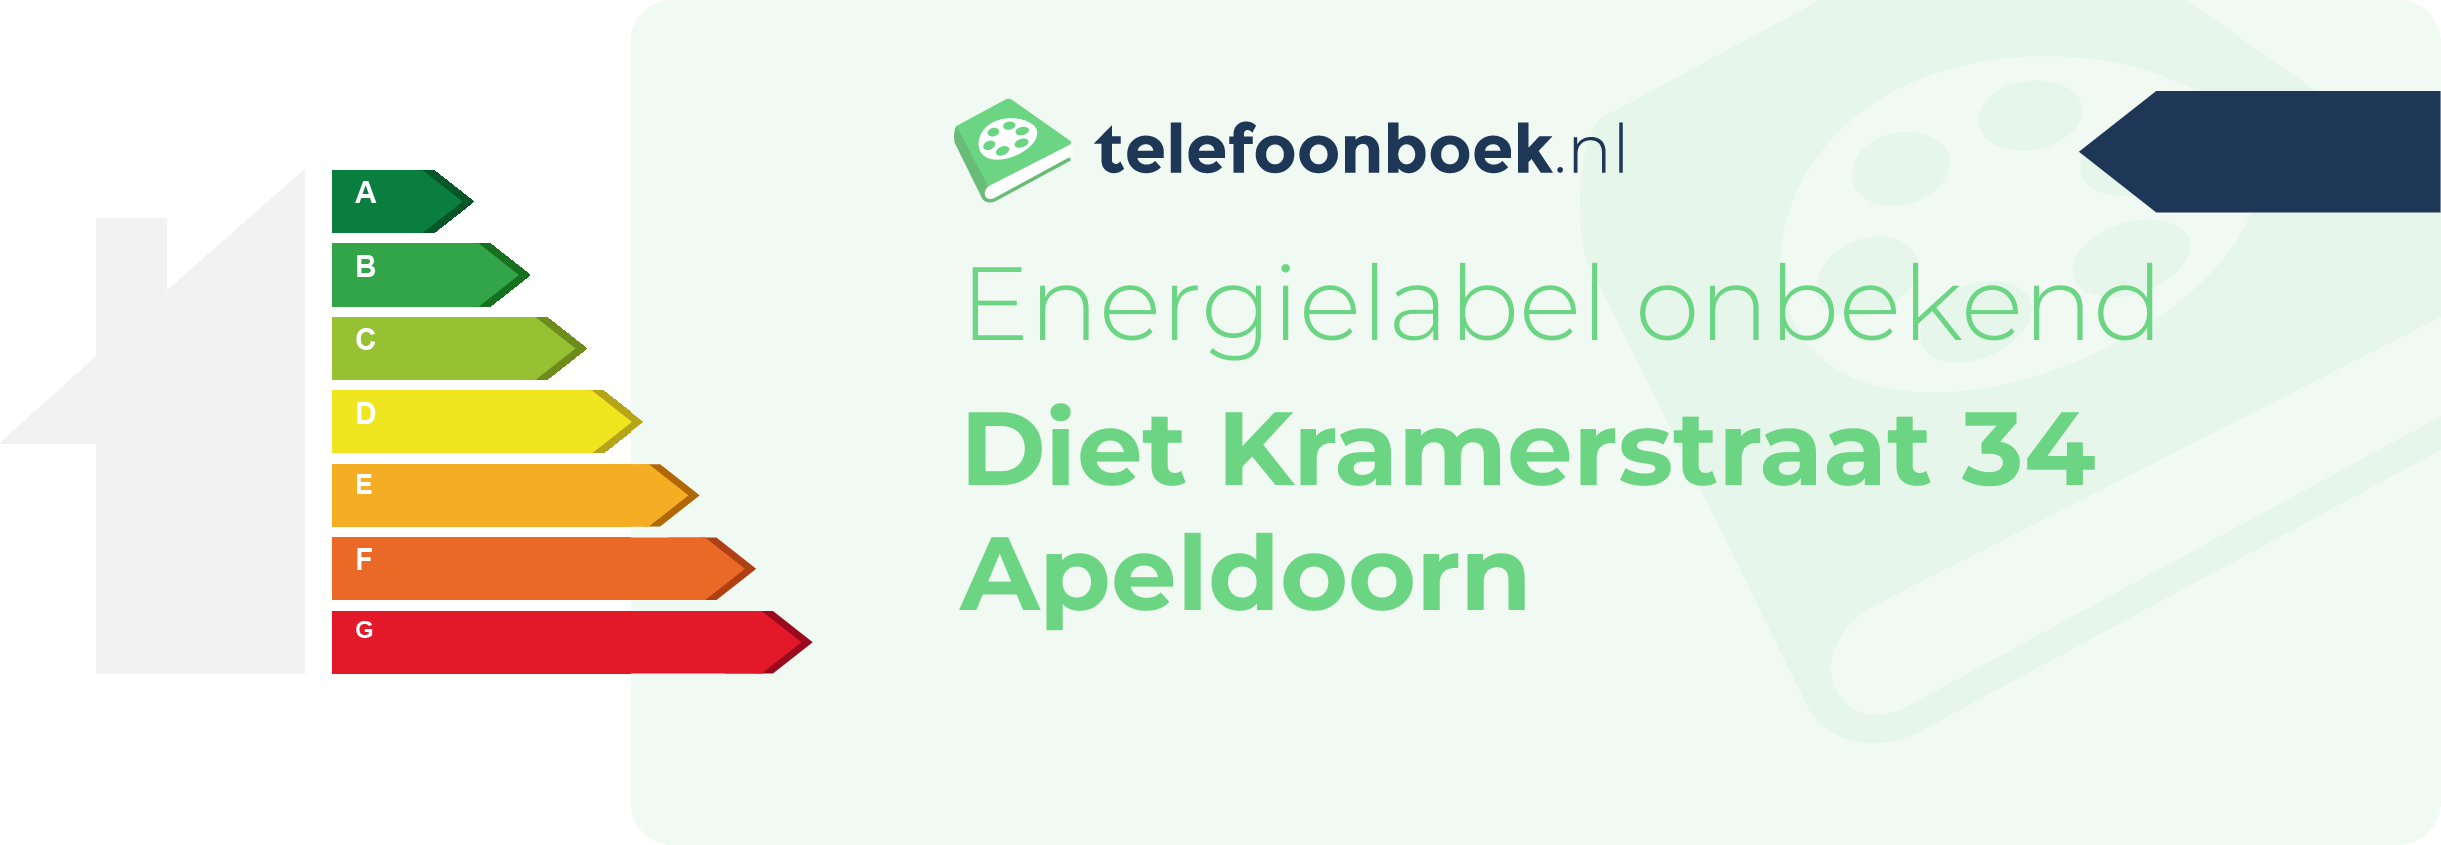 Energielabel Diet Kramerstraat 34 Apeldoorn